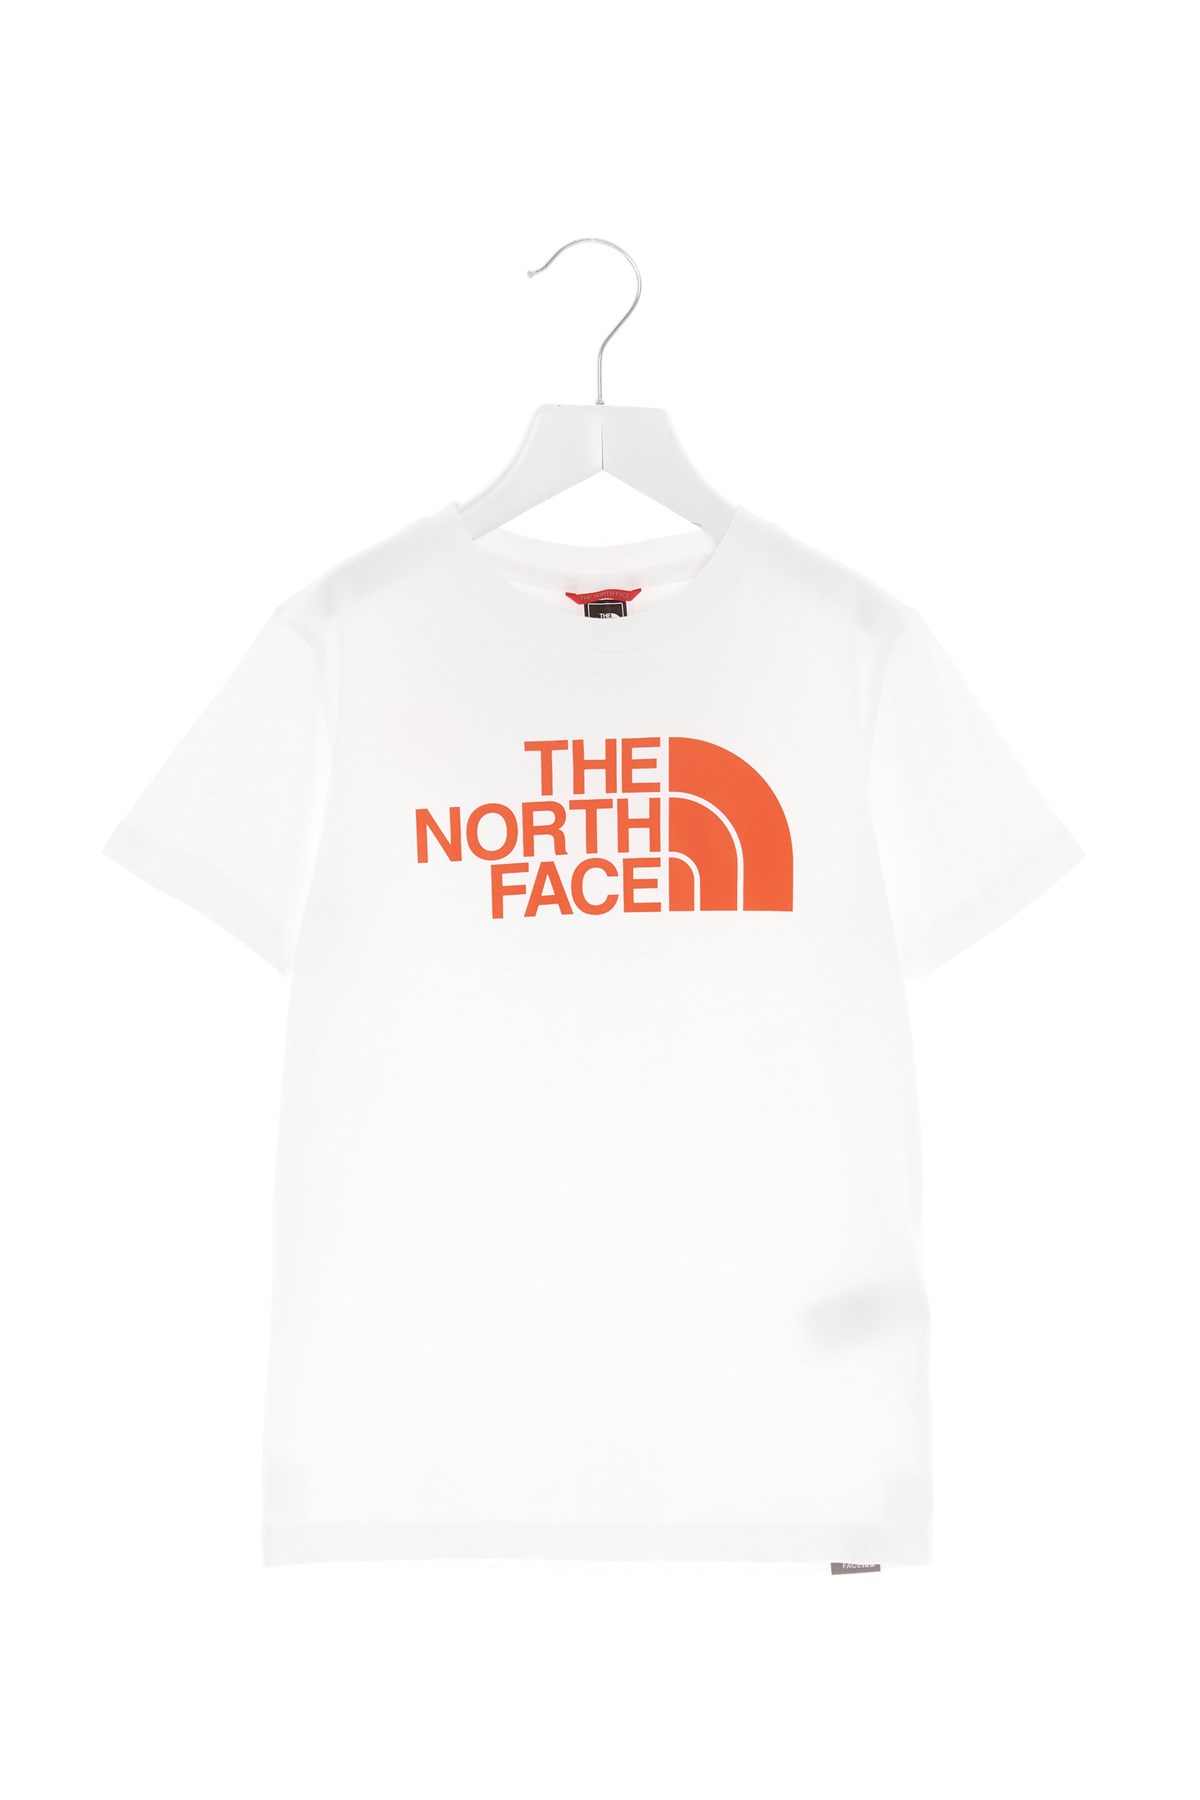 THE NORTH FACE Logo T-Shirt